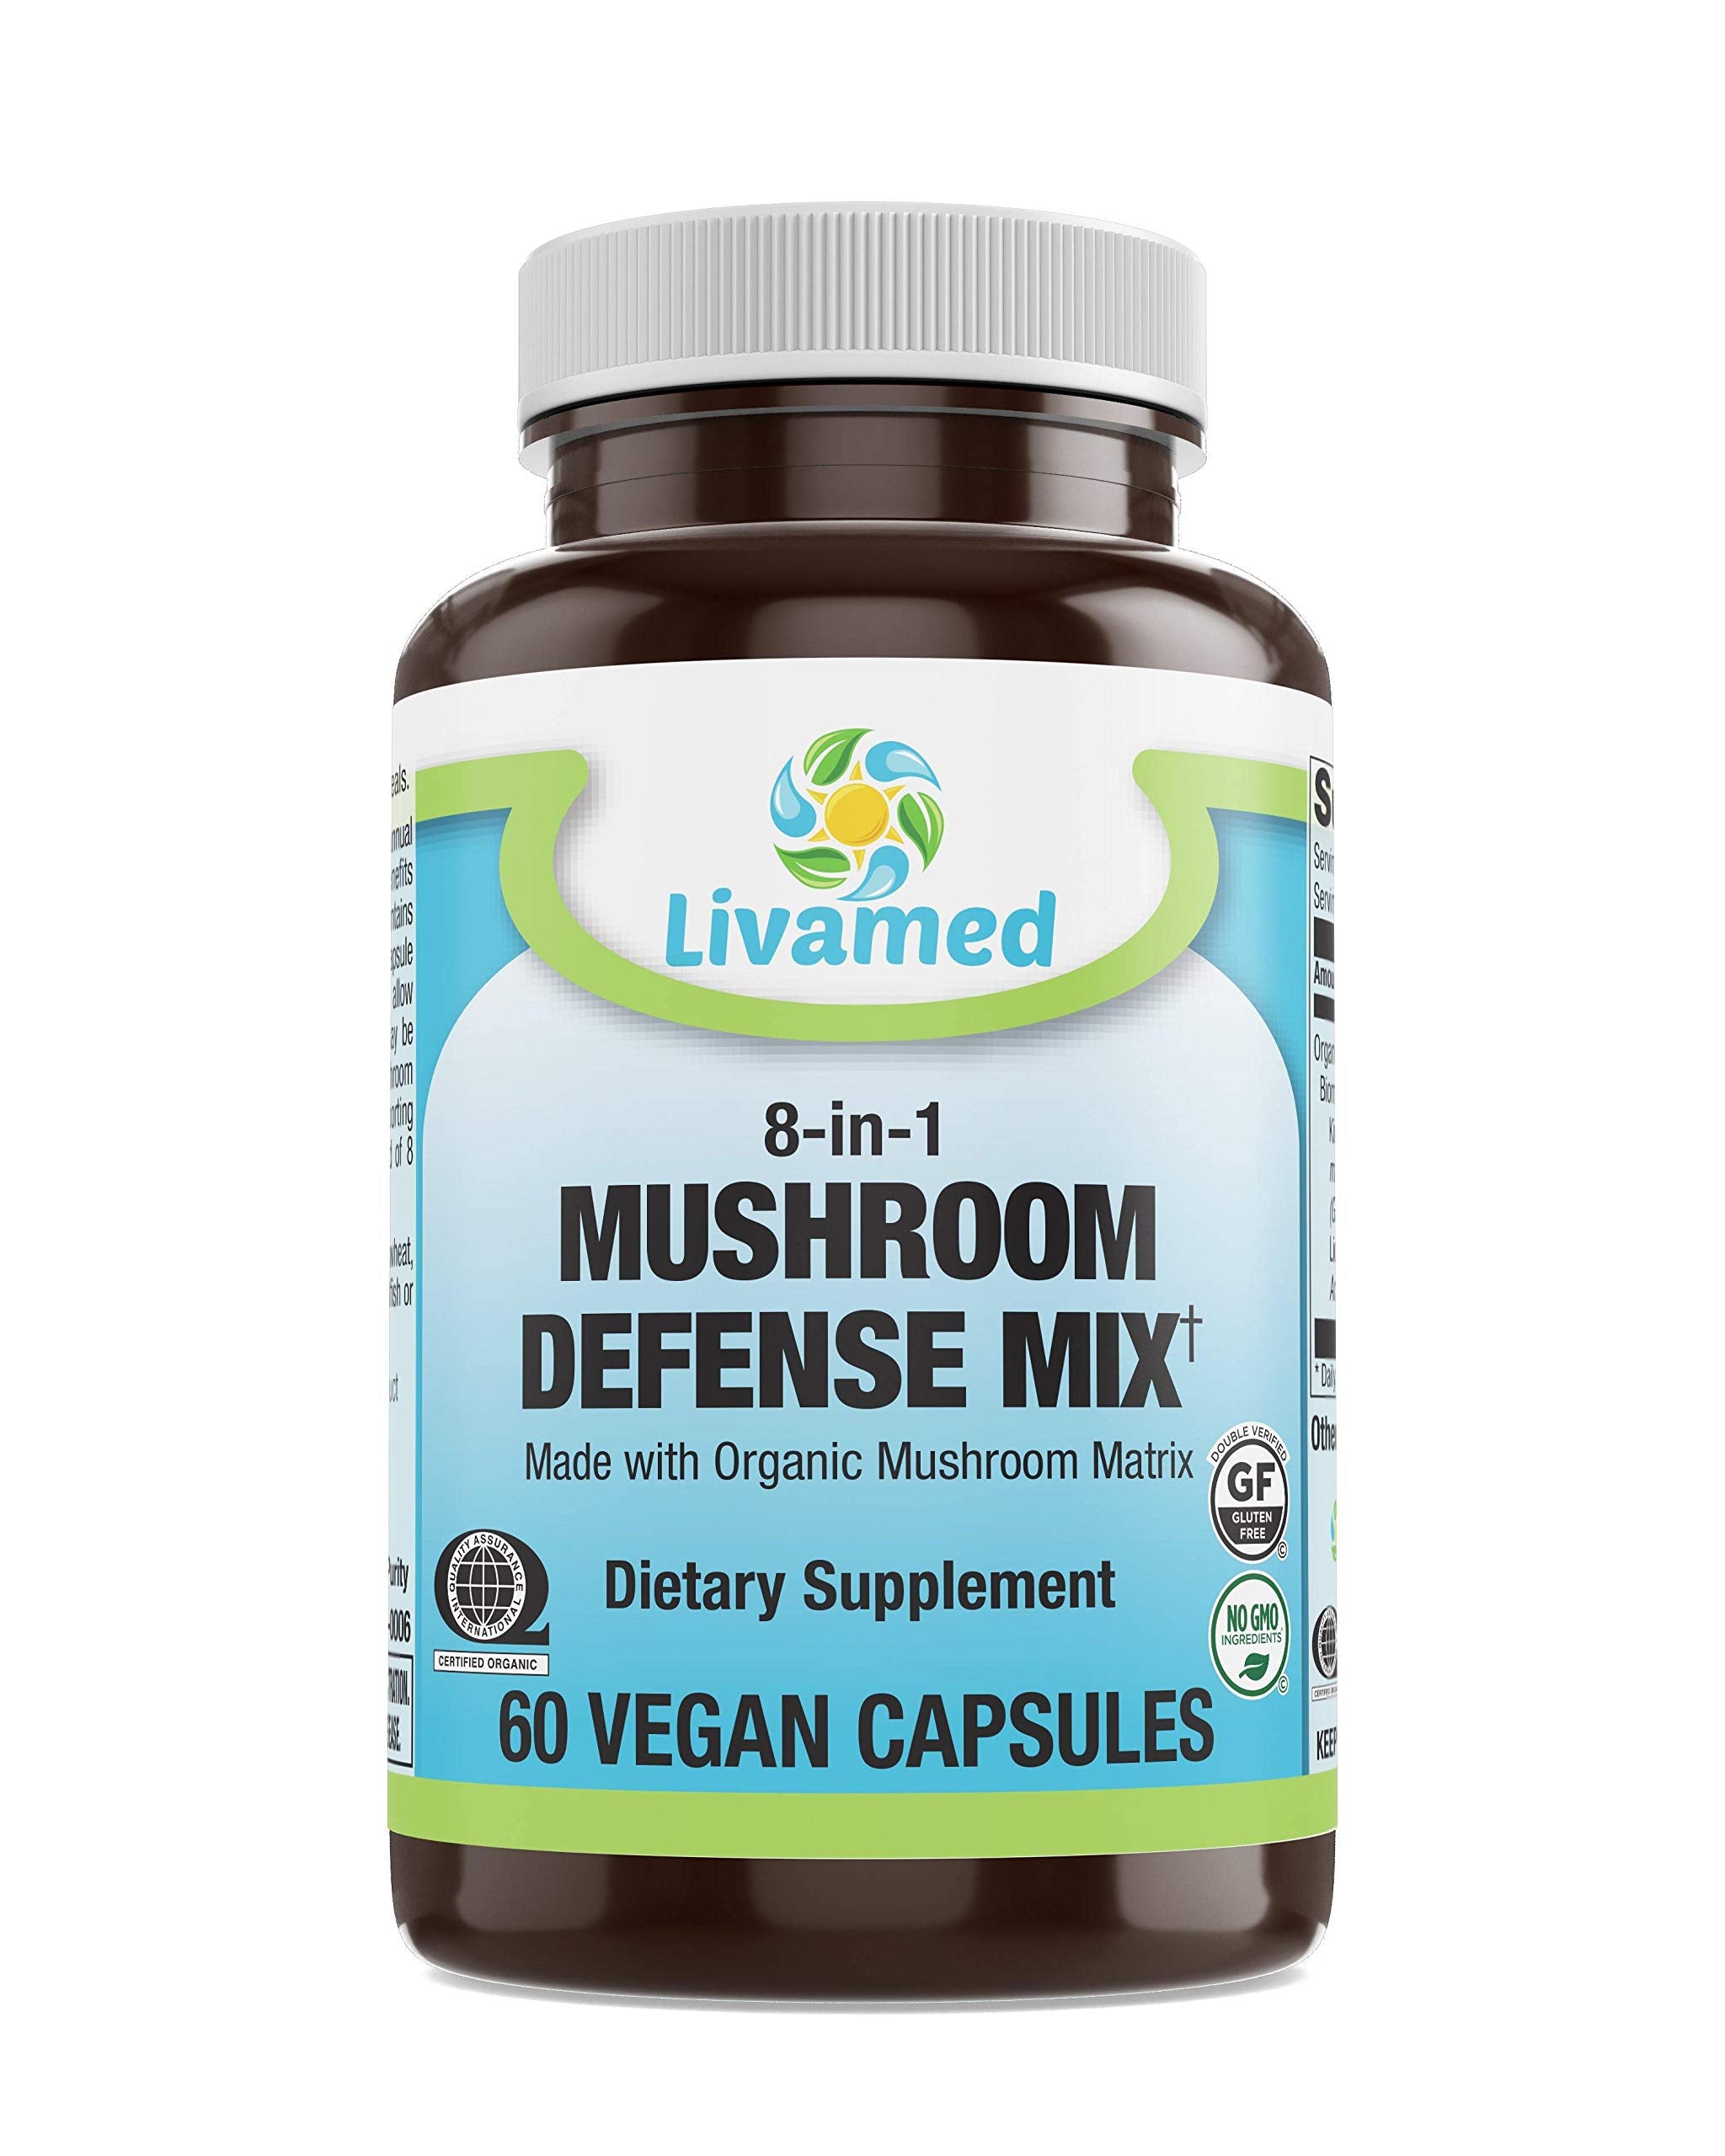 Livamed - Mushroom Defense Mix Veg Caps - 8 in 1 Blend Made with Organic Mushroom Complex 60 Count